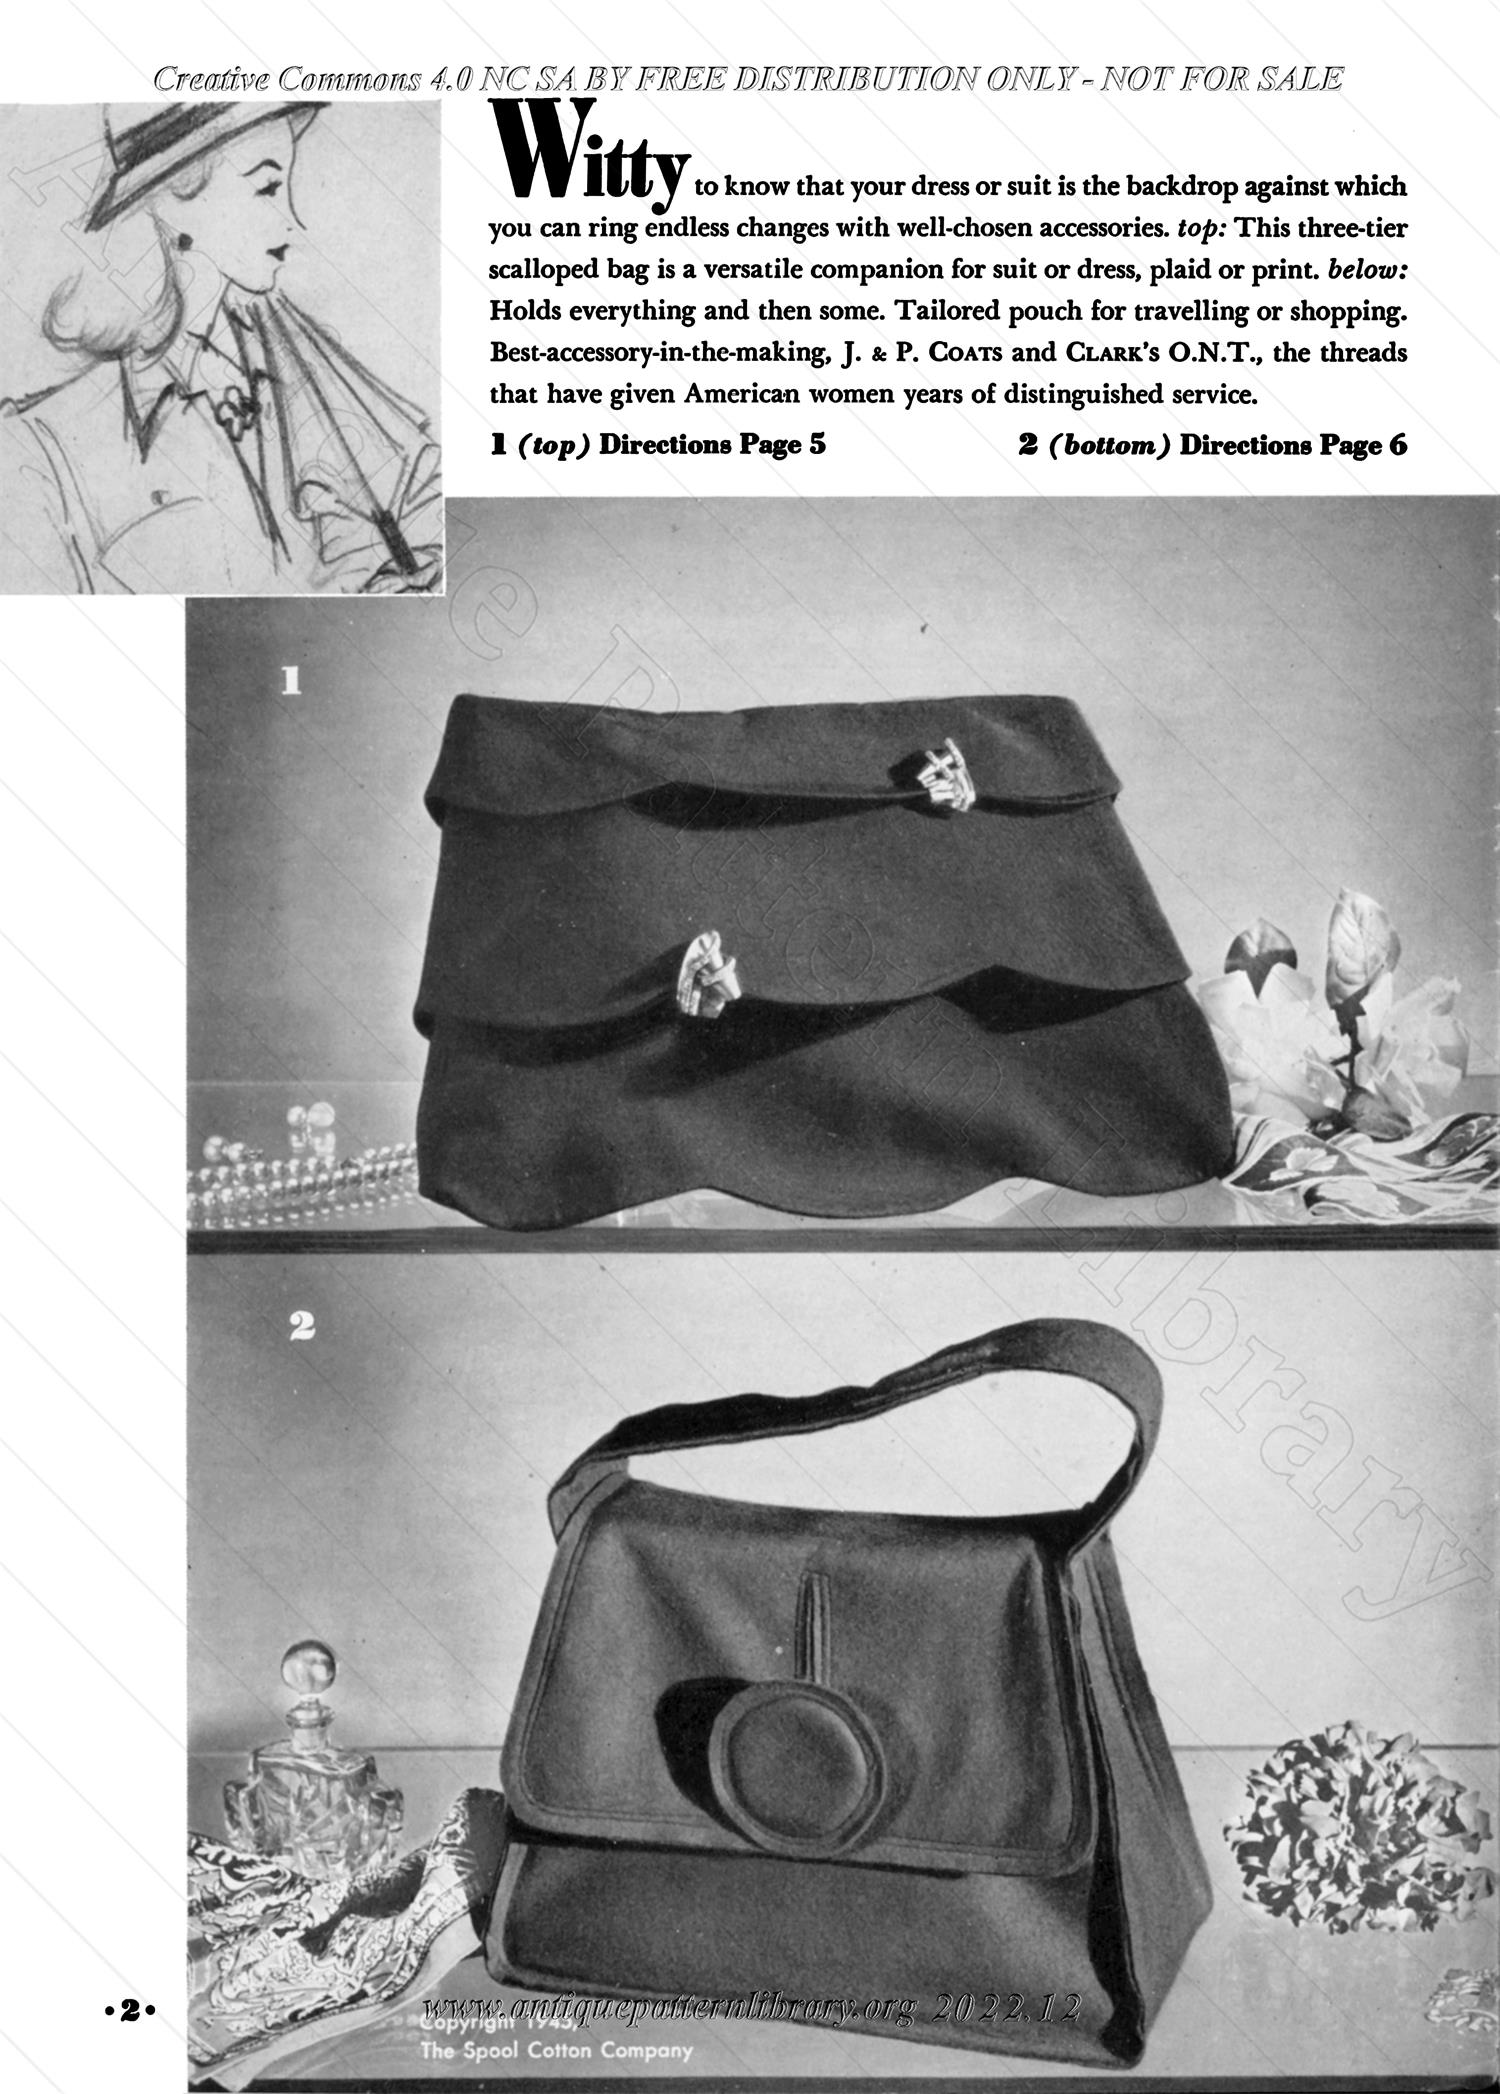 J-PA275 Bags - Book No. S-17